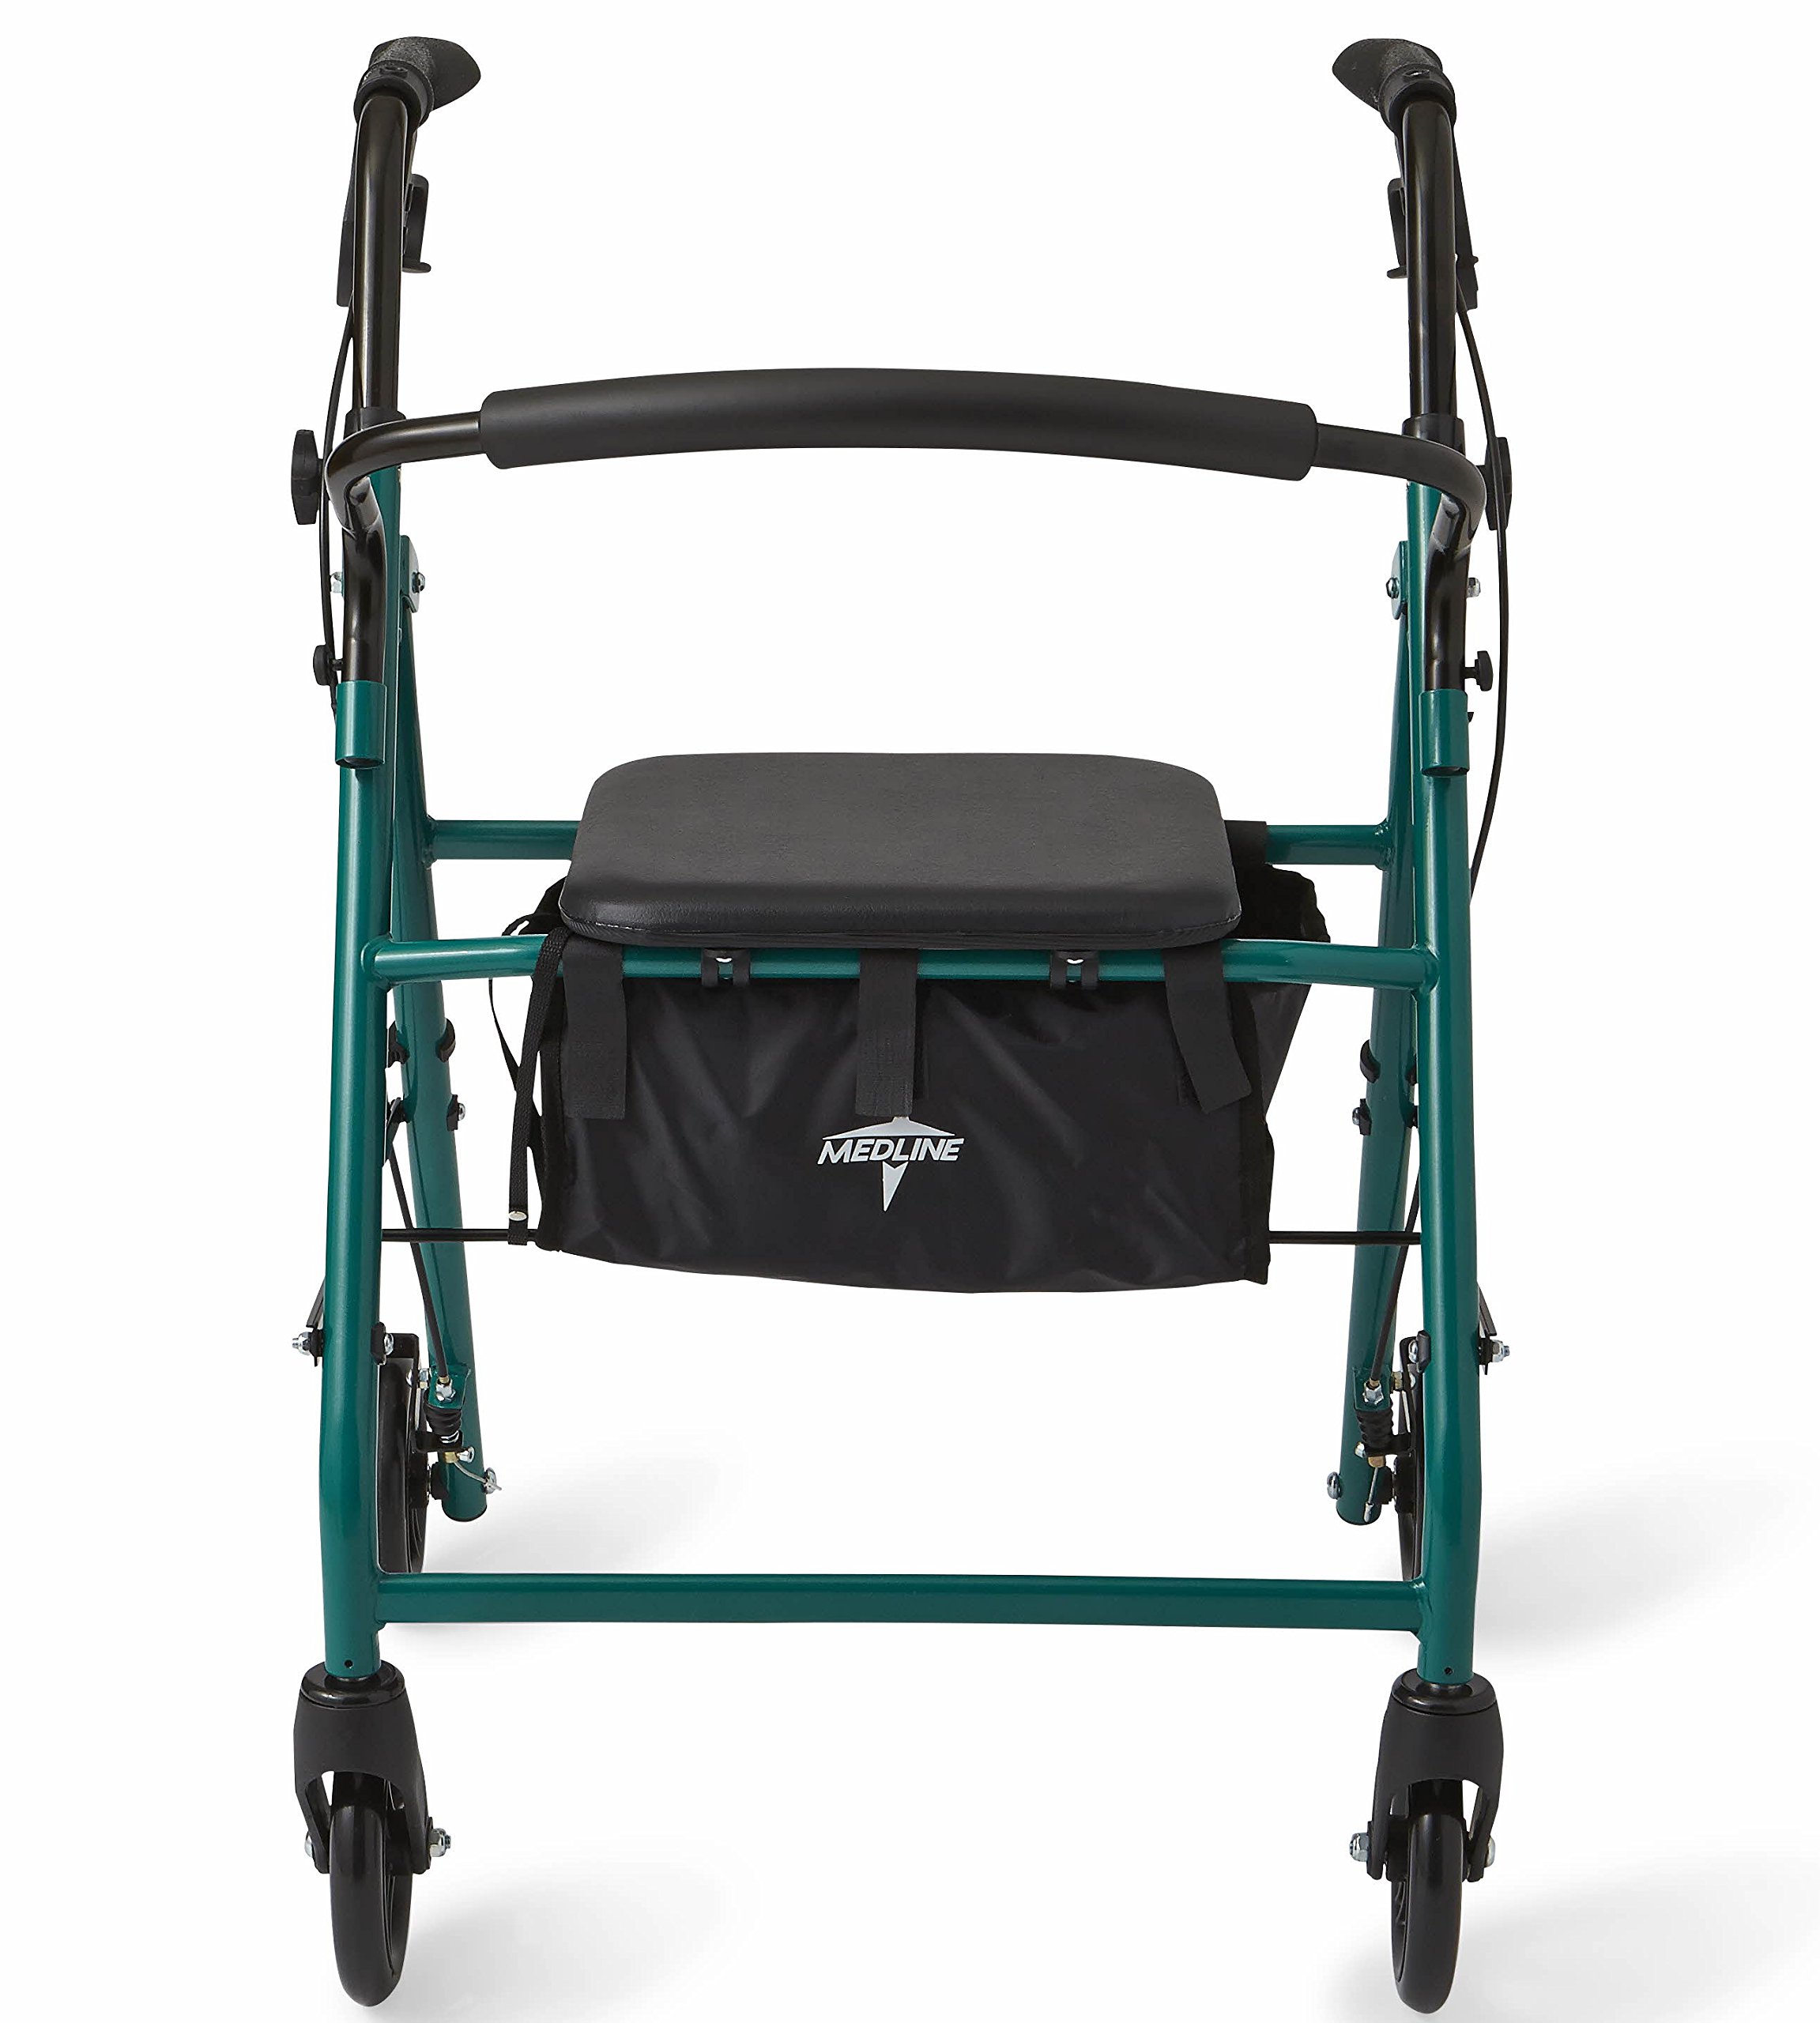 Medline Steel Foldable Adult Transport Rollator Mobility Walker with 6” Wheels, Green